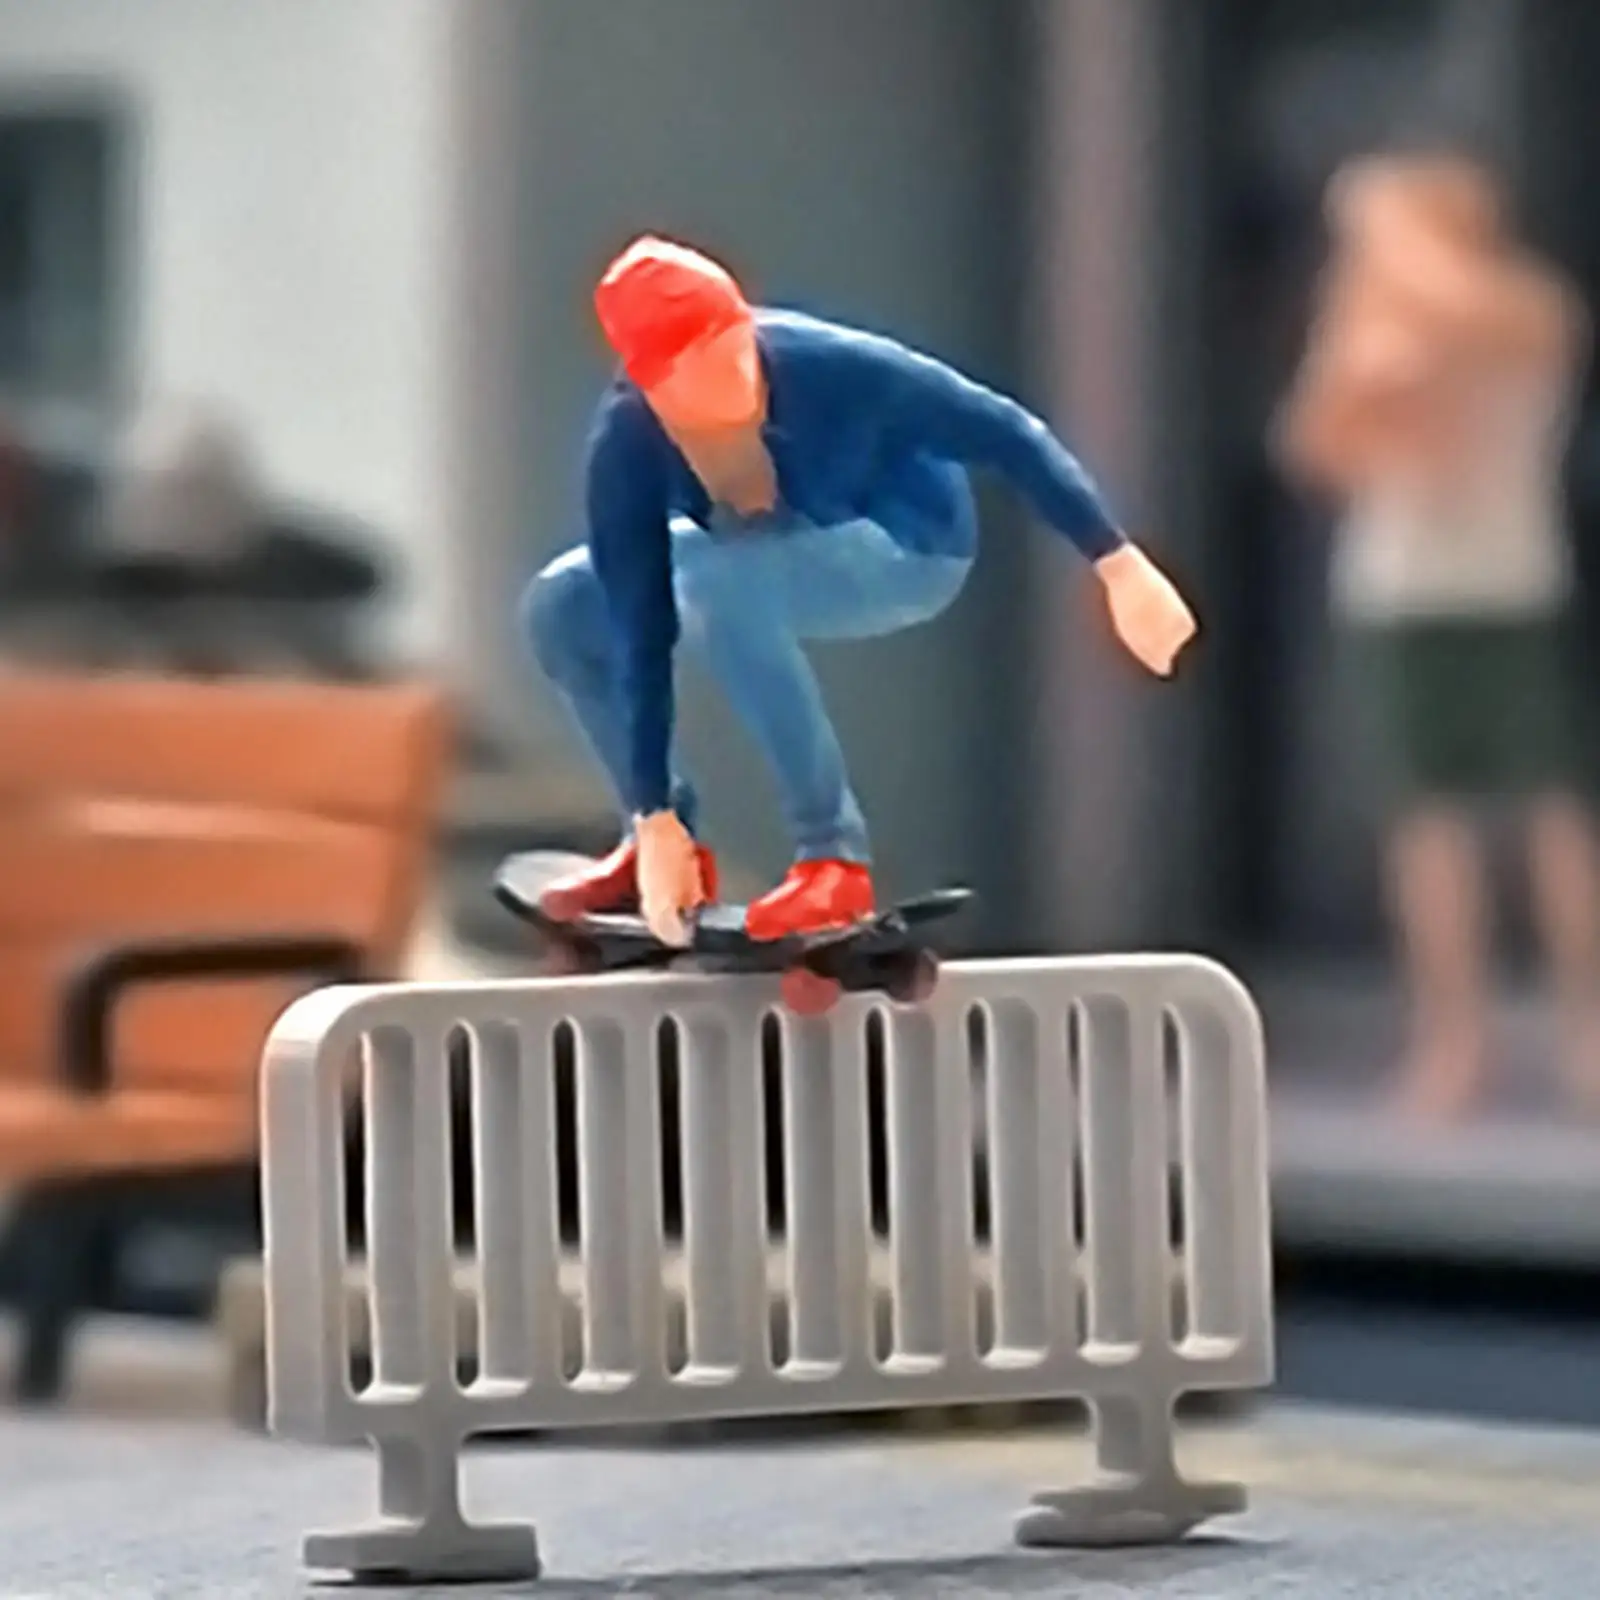 1/64 Miniature Figure Skateboard Boy Painted Dollhouse Decor for Collections DIY Projects Railway Fariy Garden Micro Landscape